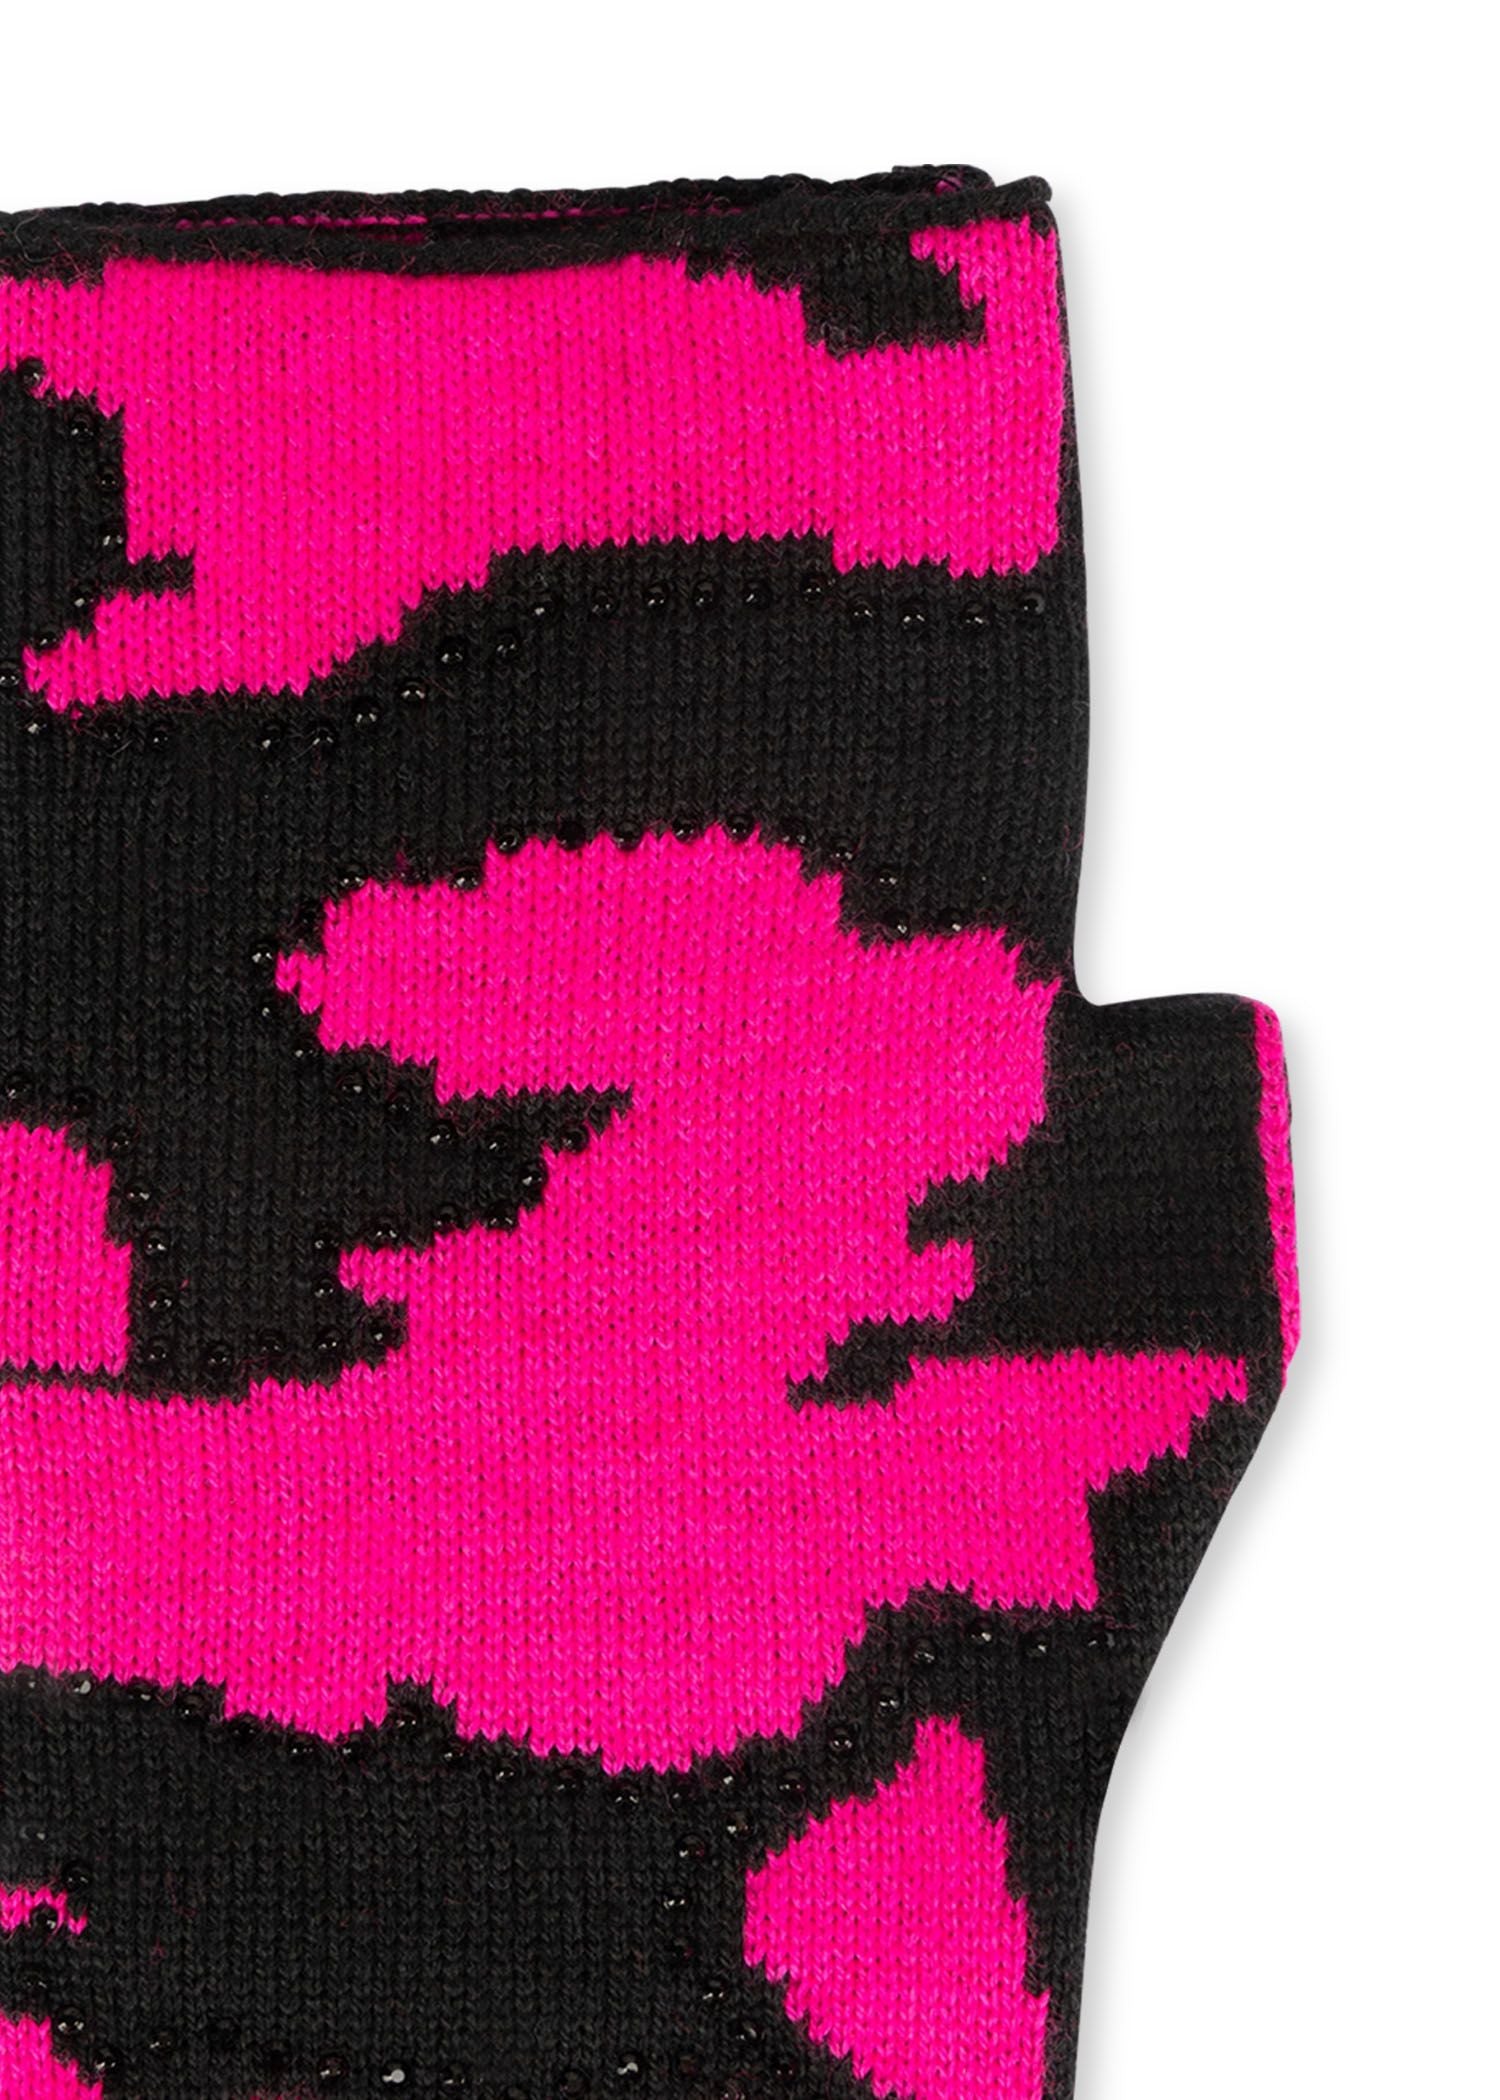 colorado black/hot pink camo fingerless gloves